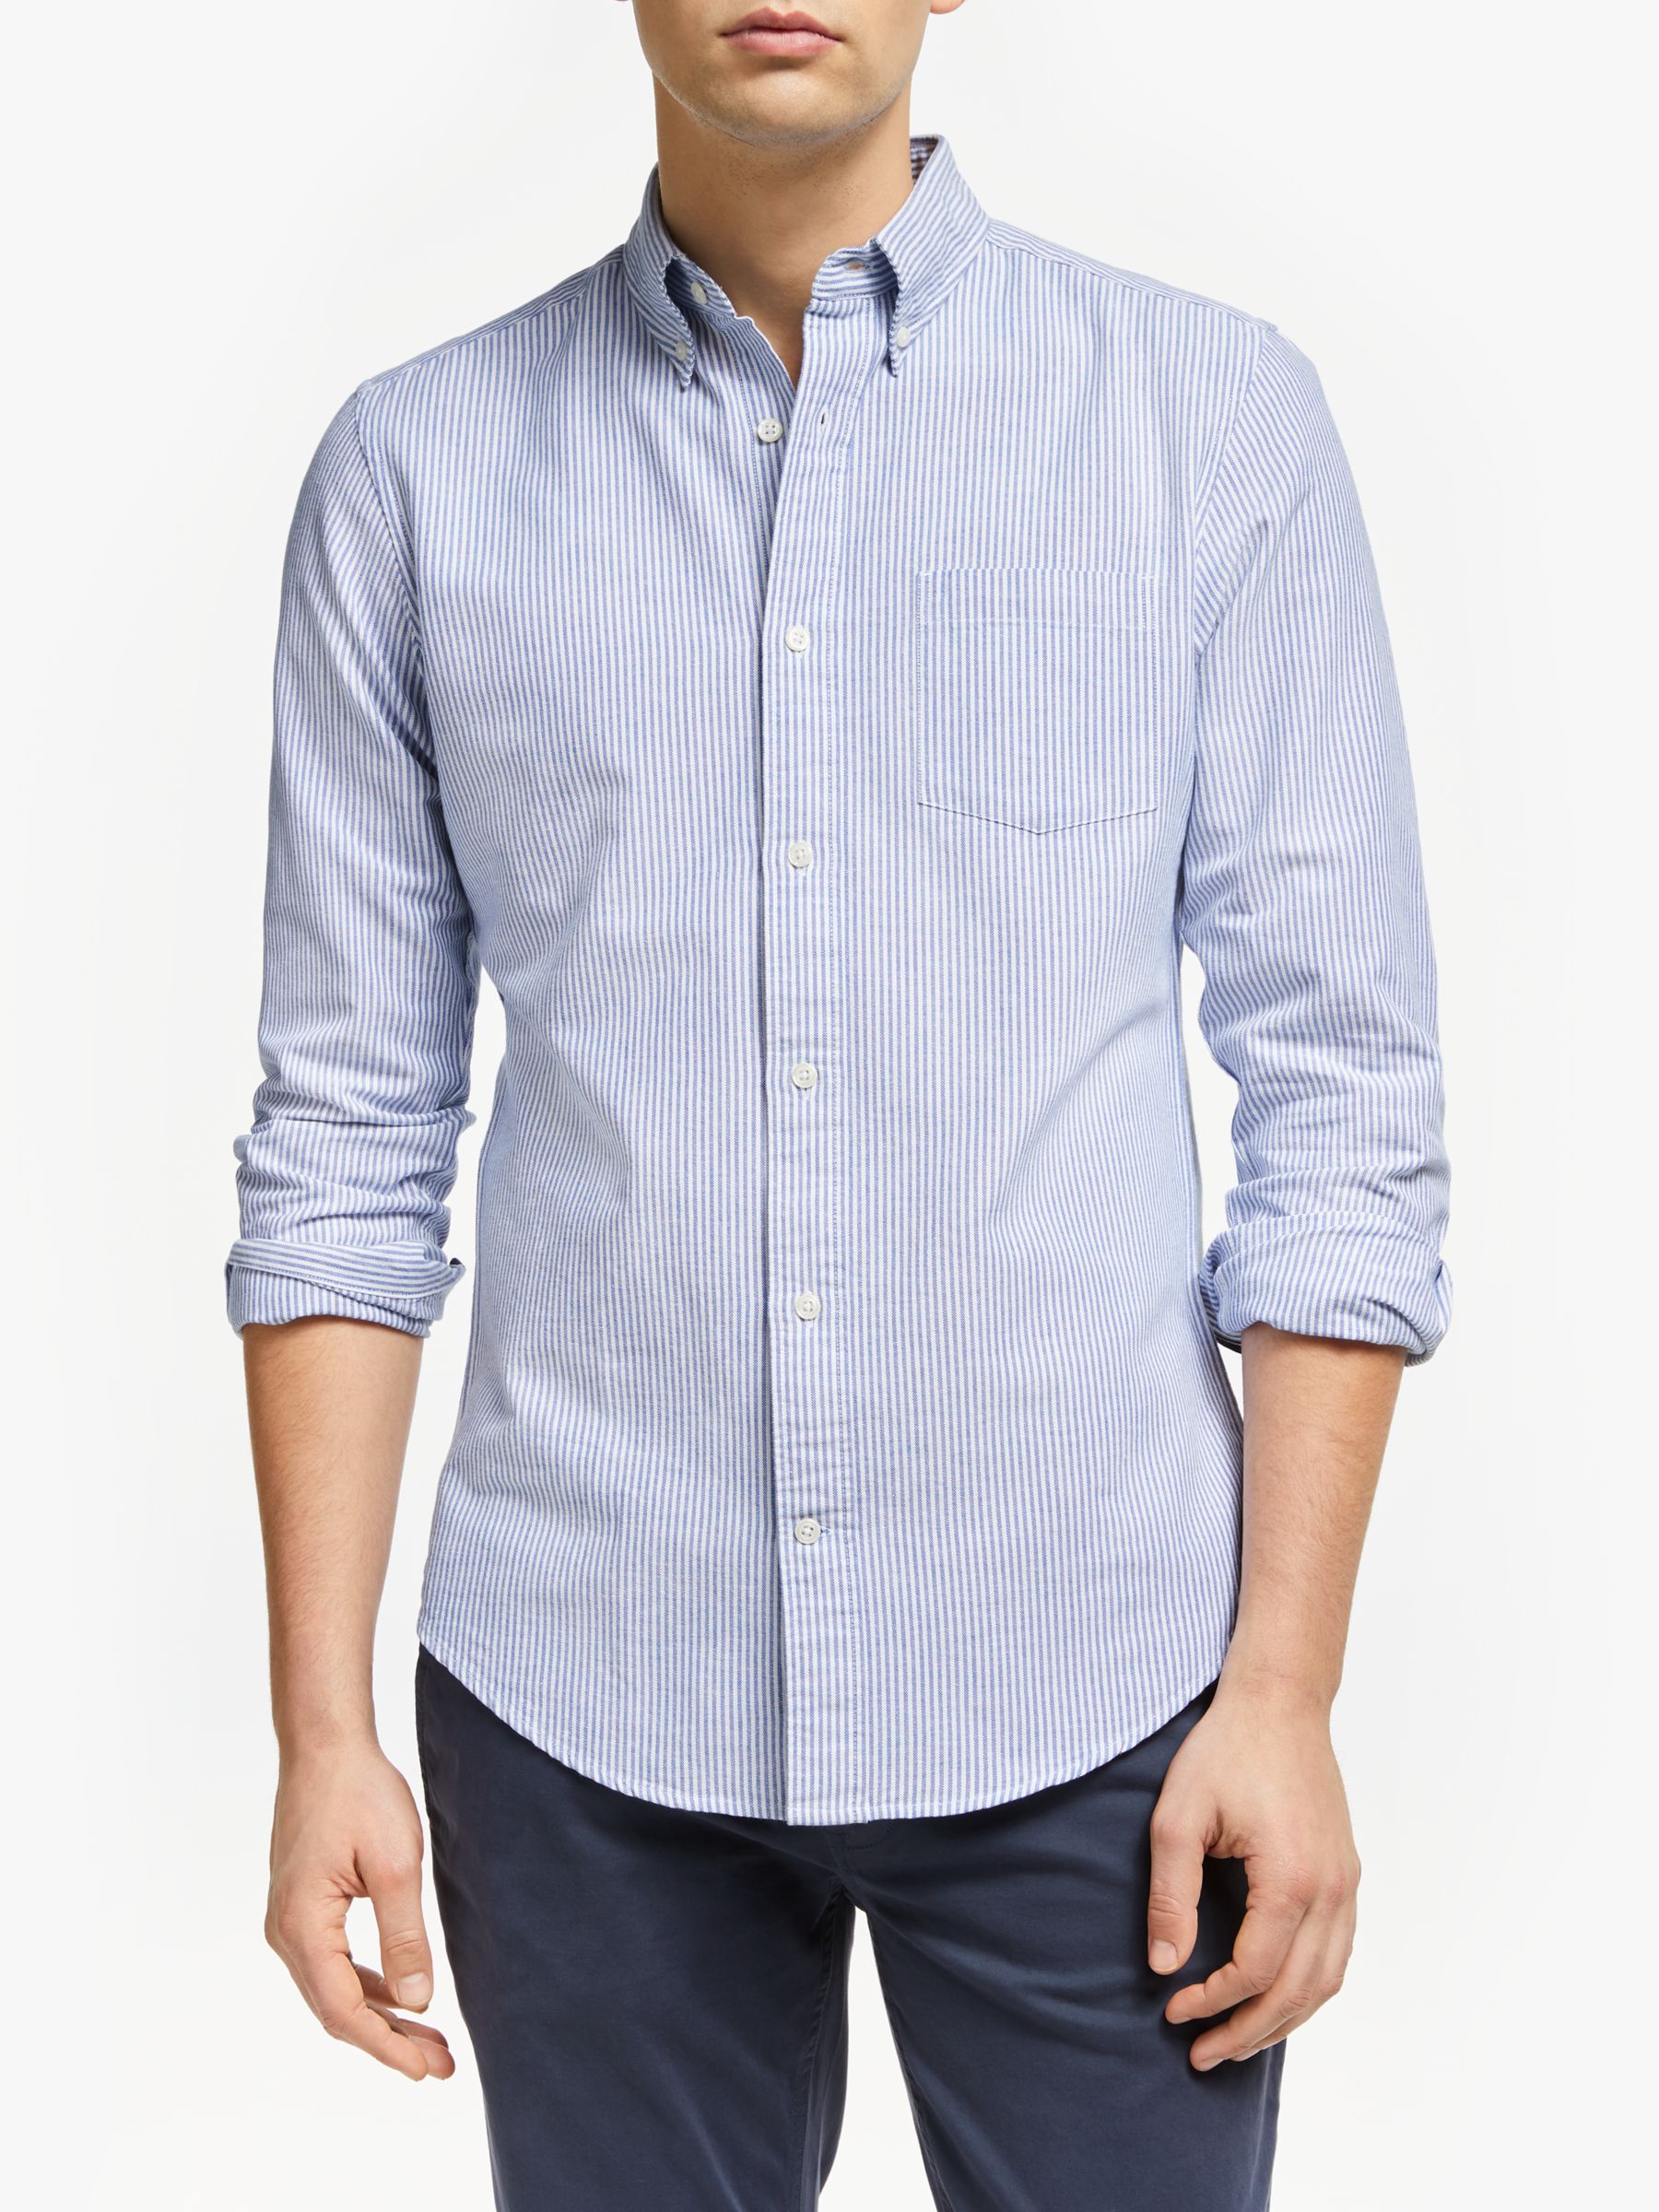 Bengal Stripe Oxford Shirt, Blue